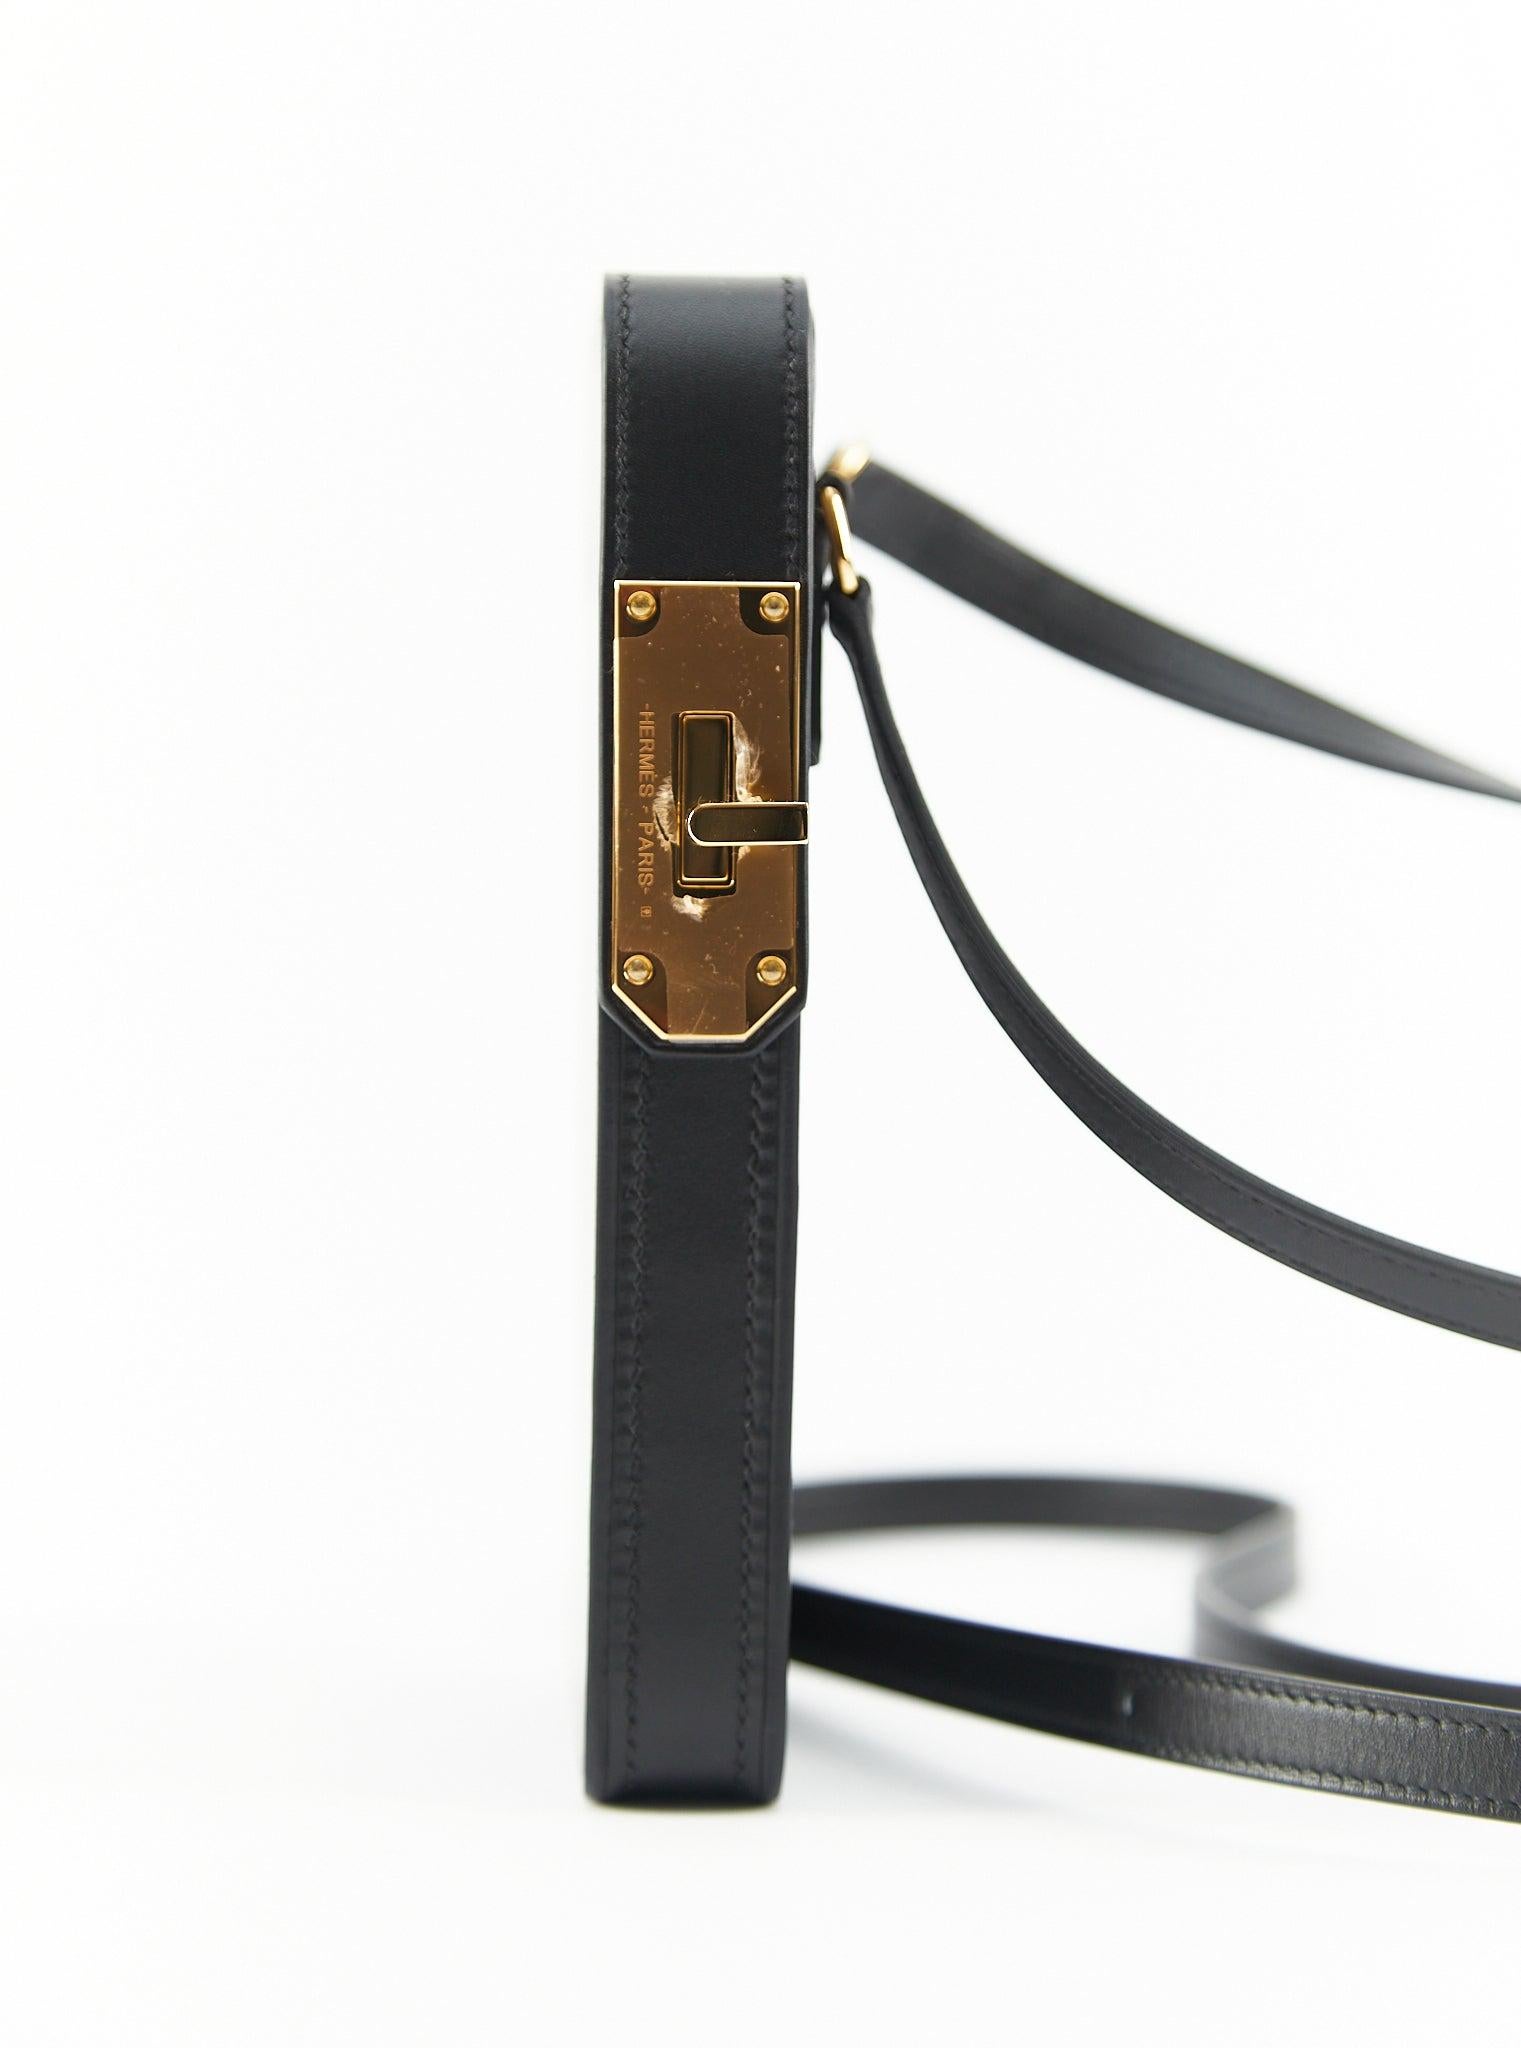 Hermès Hermesway Phone Case in Black

Tadelakt leather with Gold Hardware 

Accompanied by: Hermès Box, Hermès Dust bag & Ribbon 

Dimensions: L 8.7 x H 16.5 x D 2.2 cm